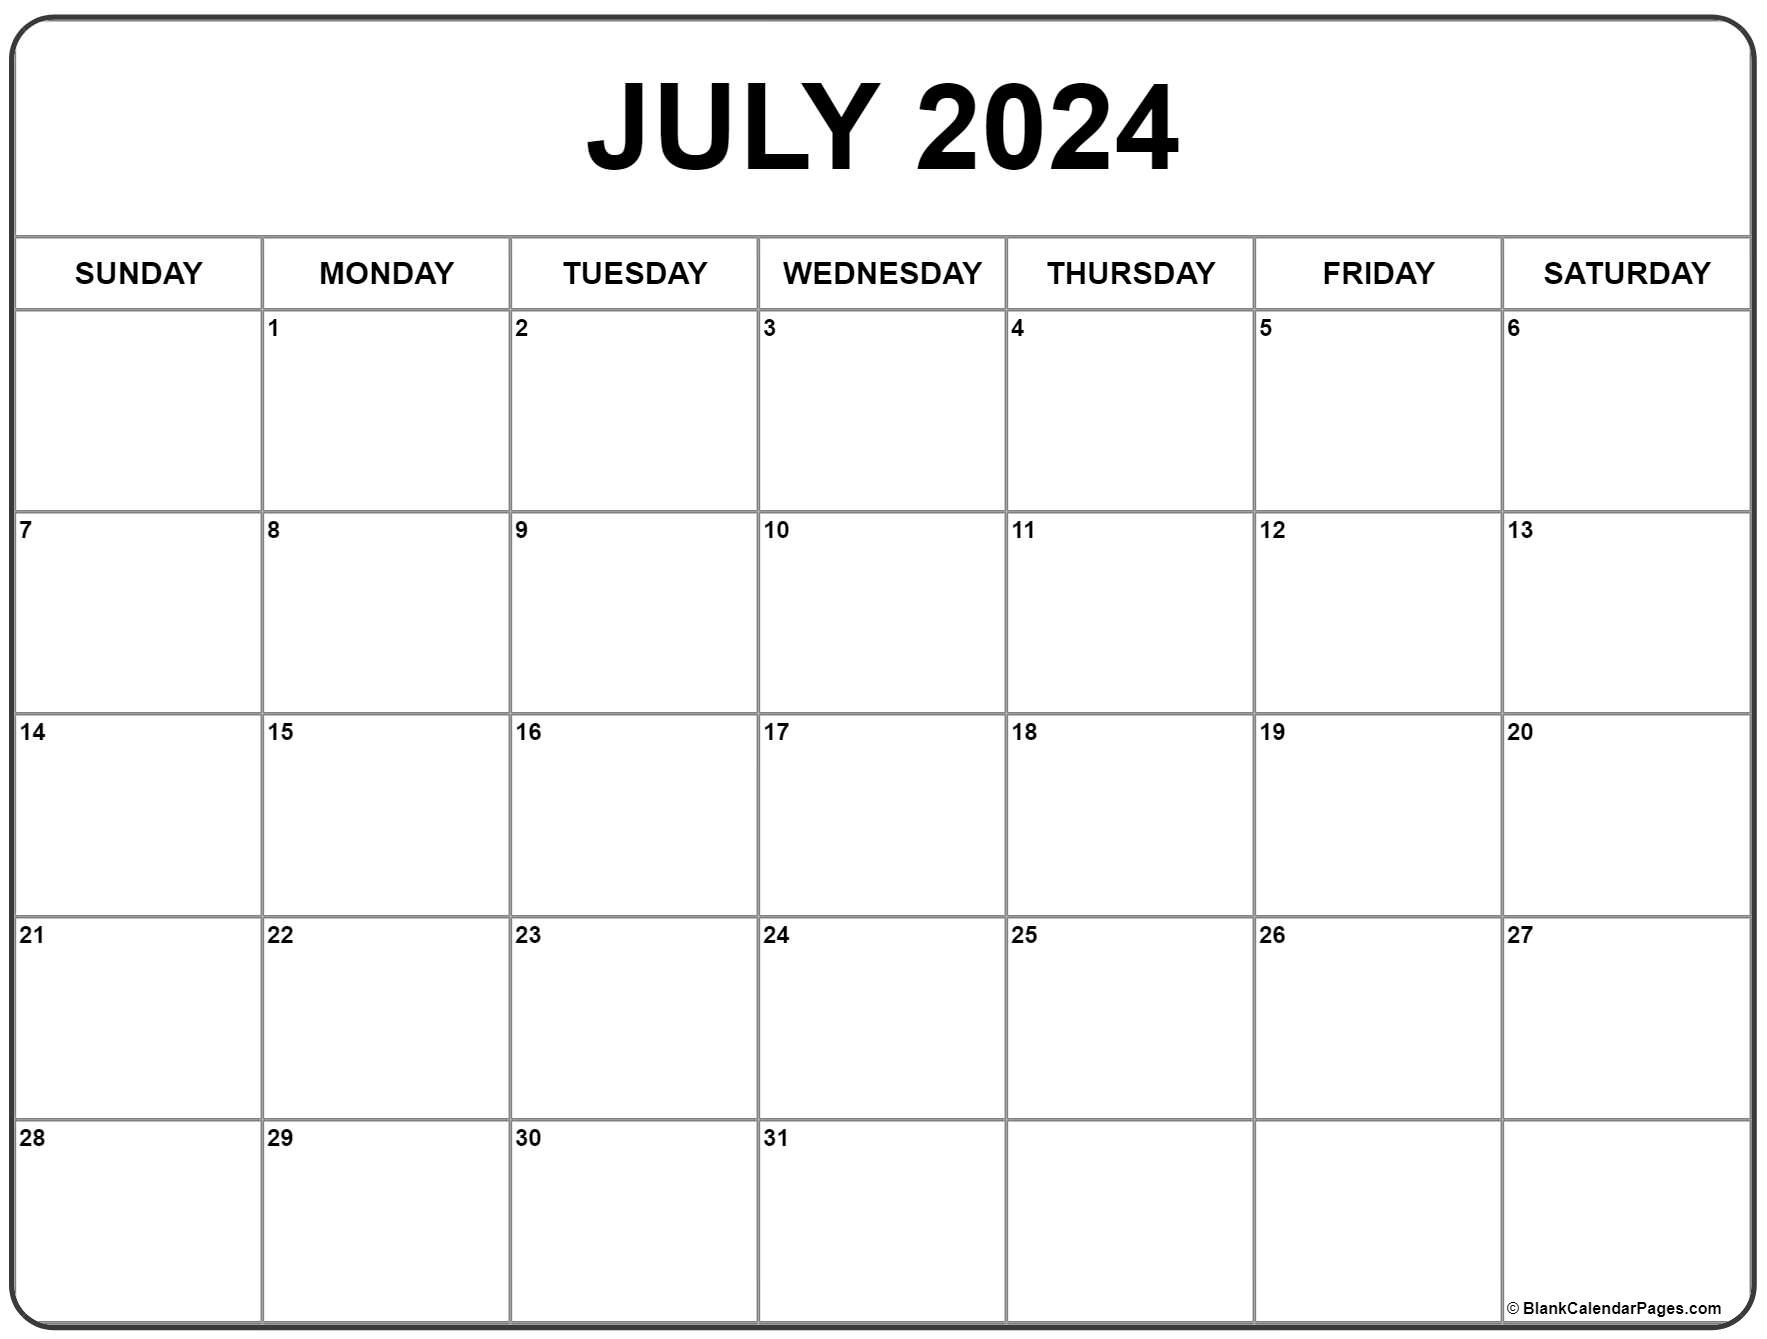 July 2024 Calendar | Free Printable Calendar for Printable Calendar July 2024